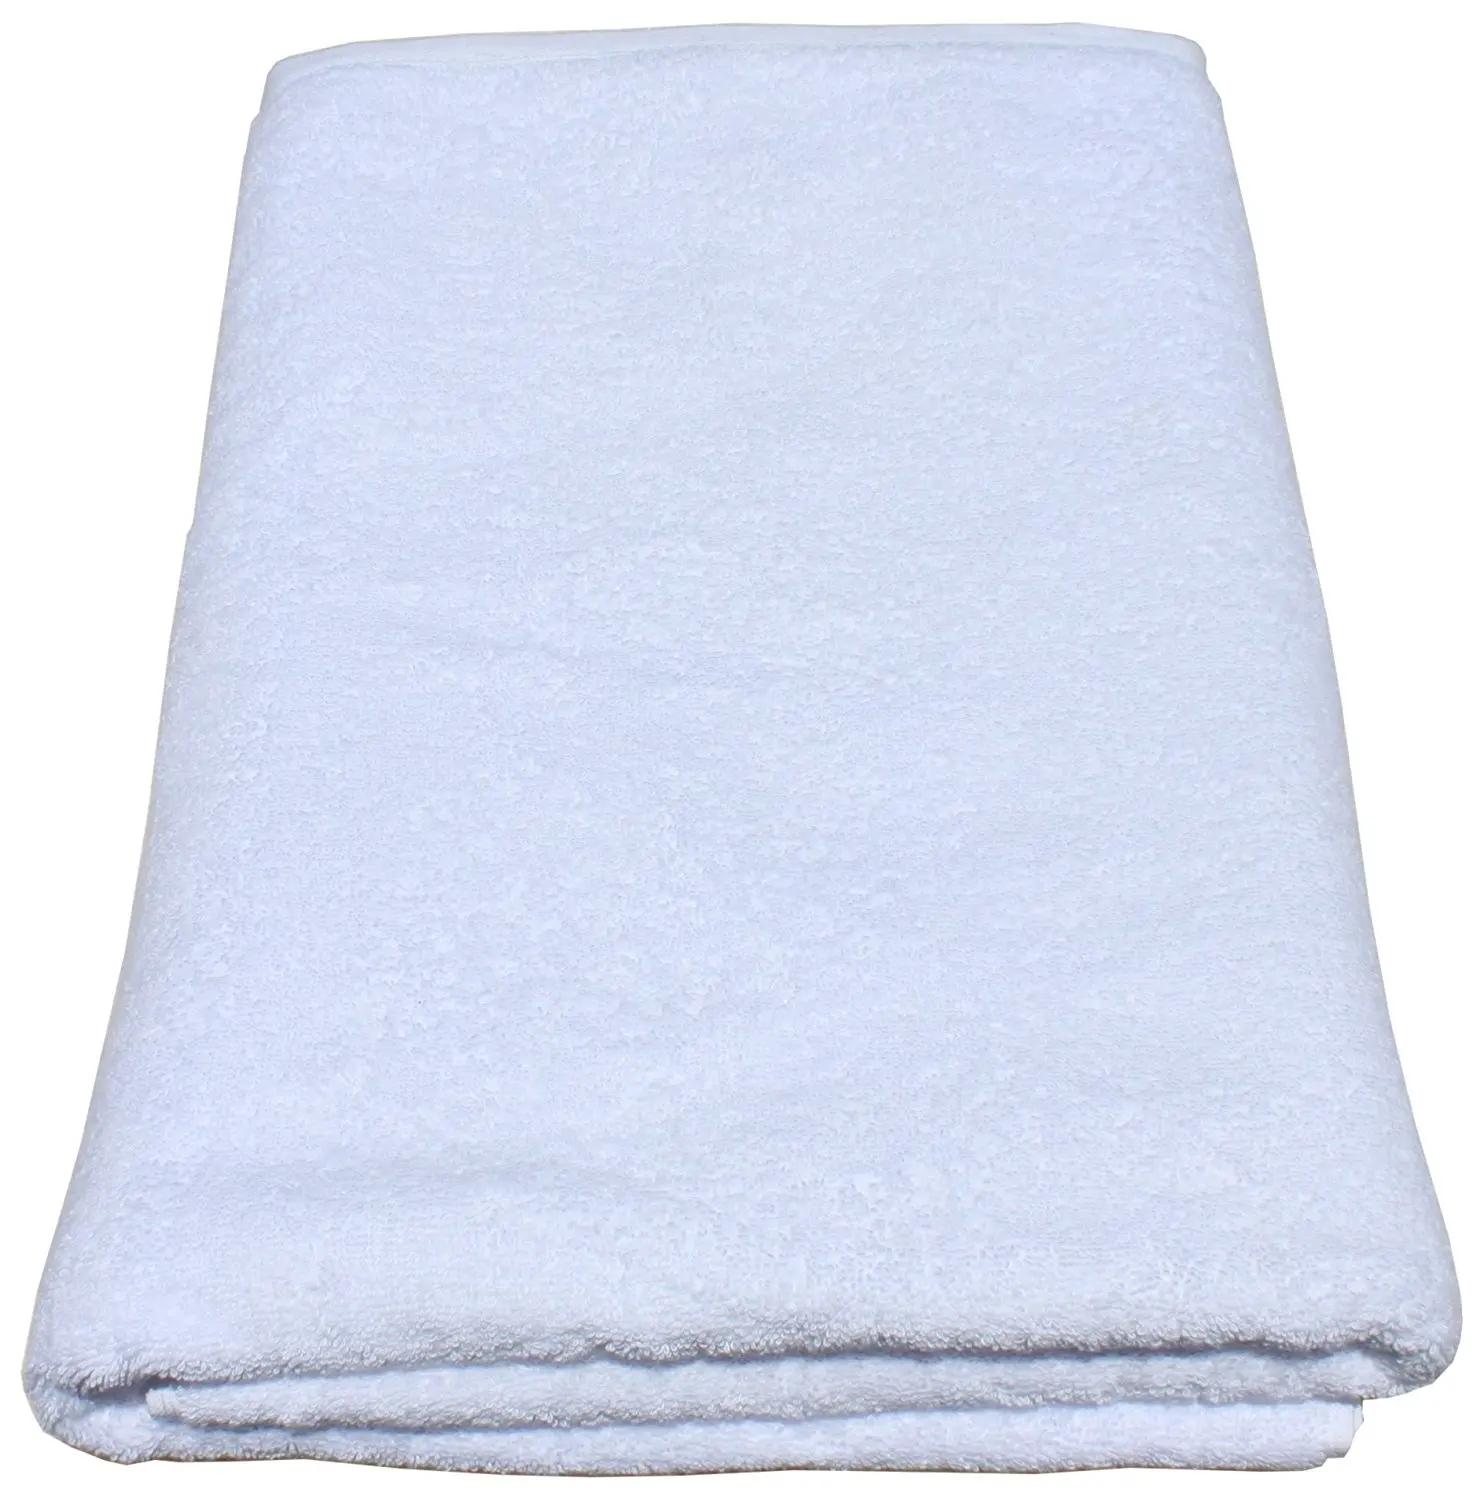 Вес полотенца для тела. Сколько весит полотенце 100 на 20. Полотенце весит